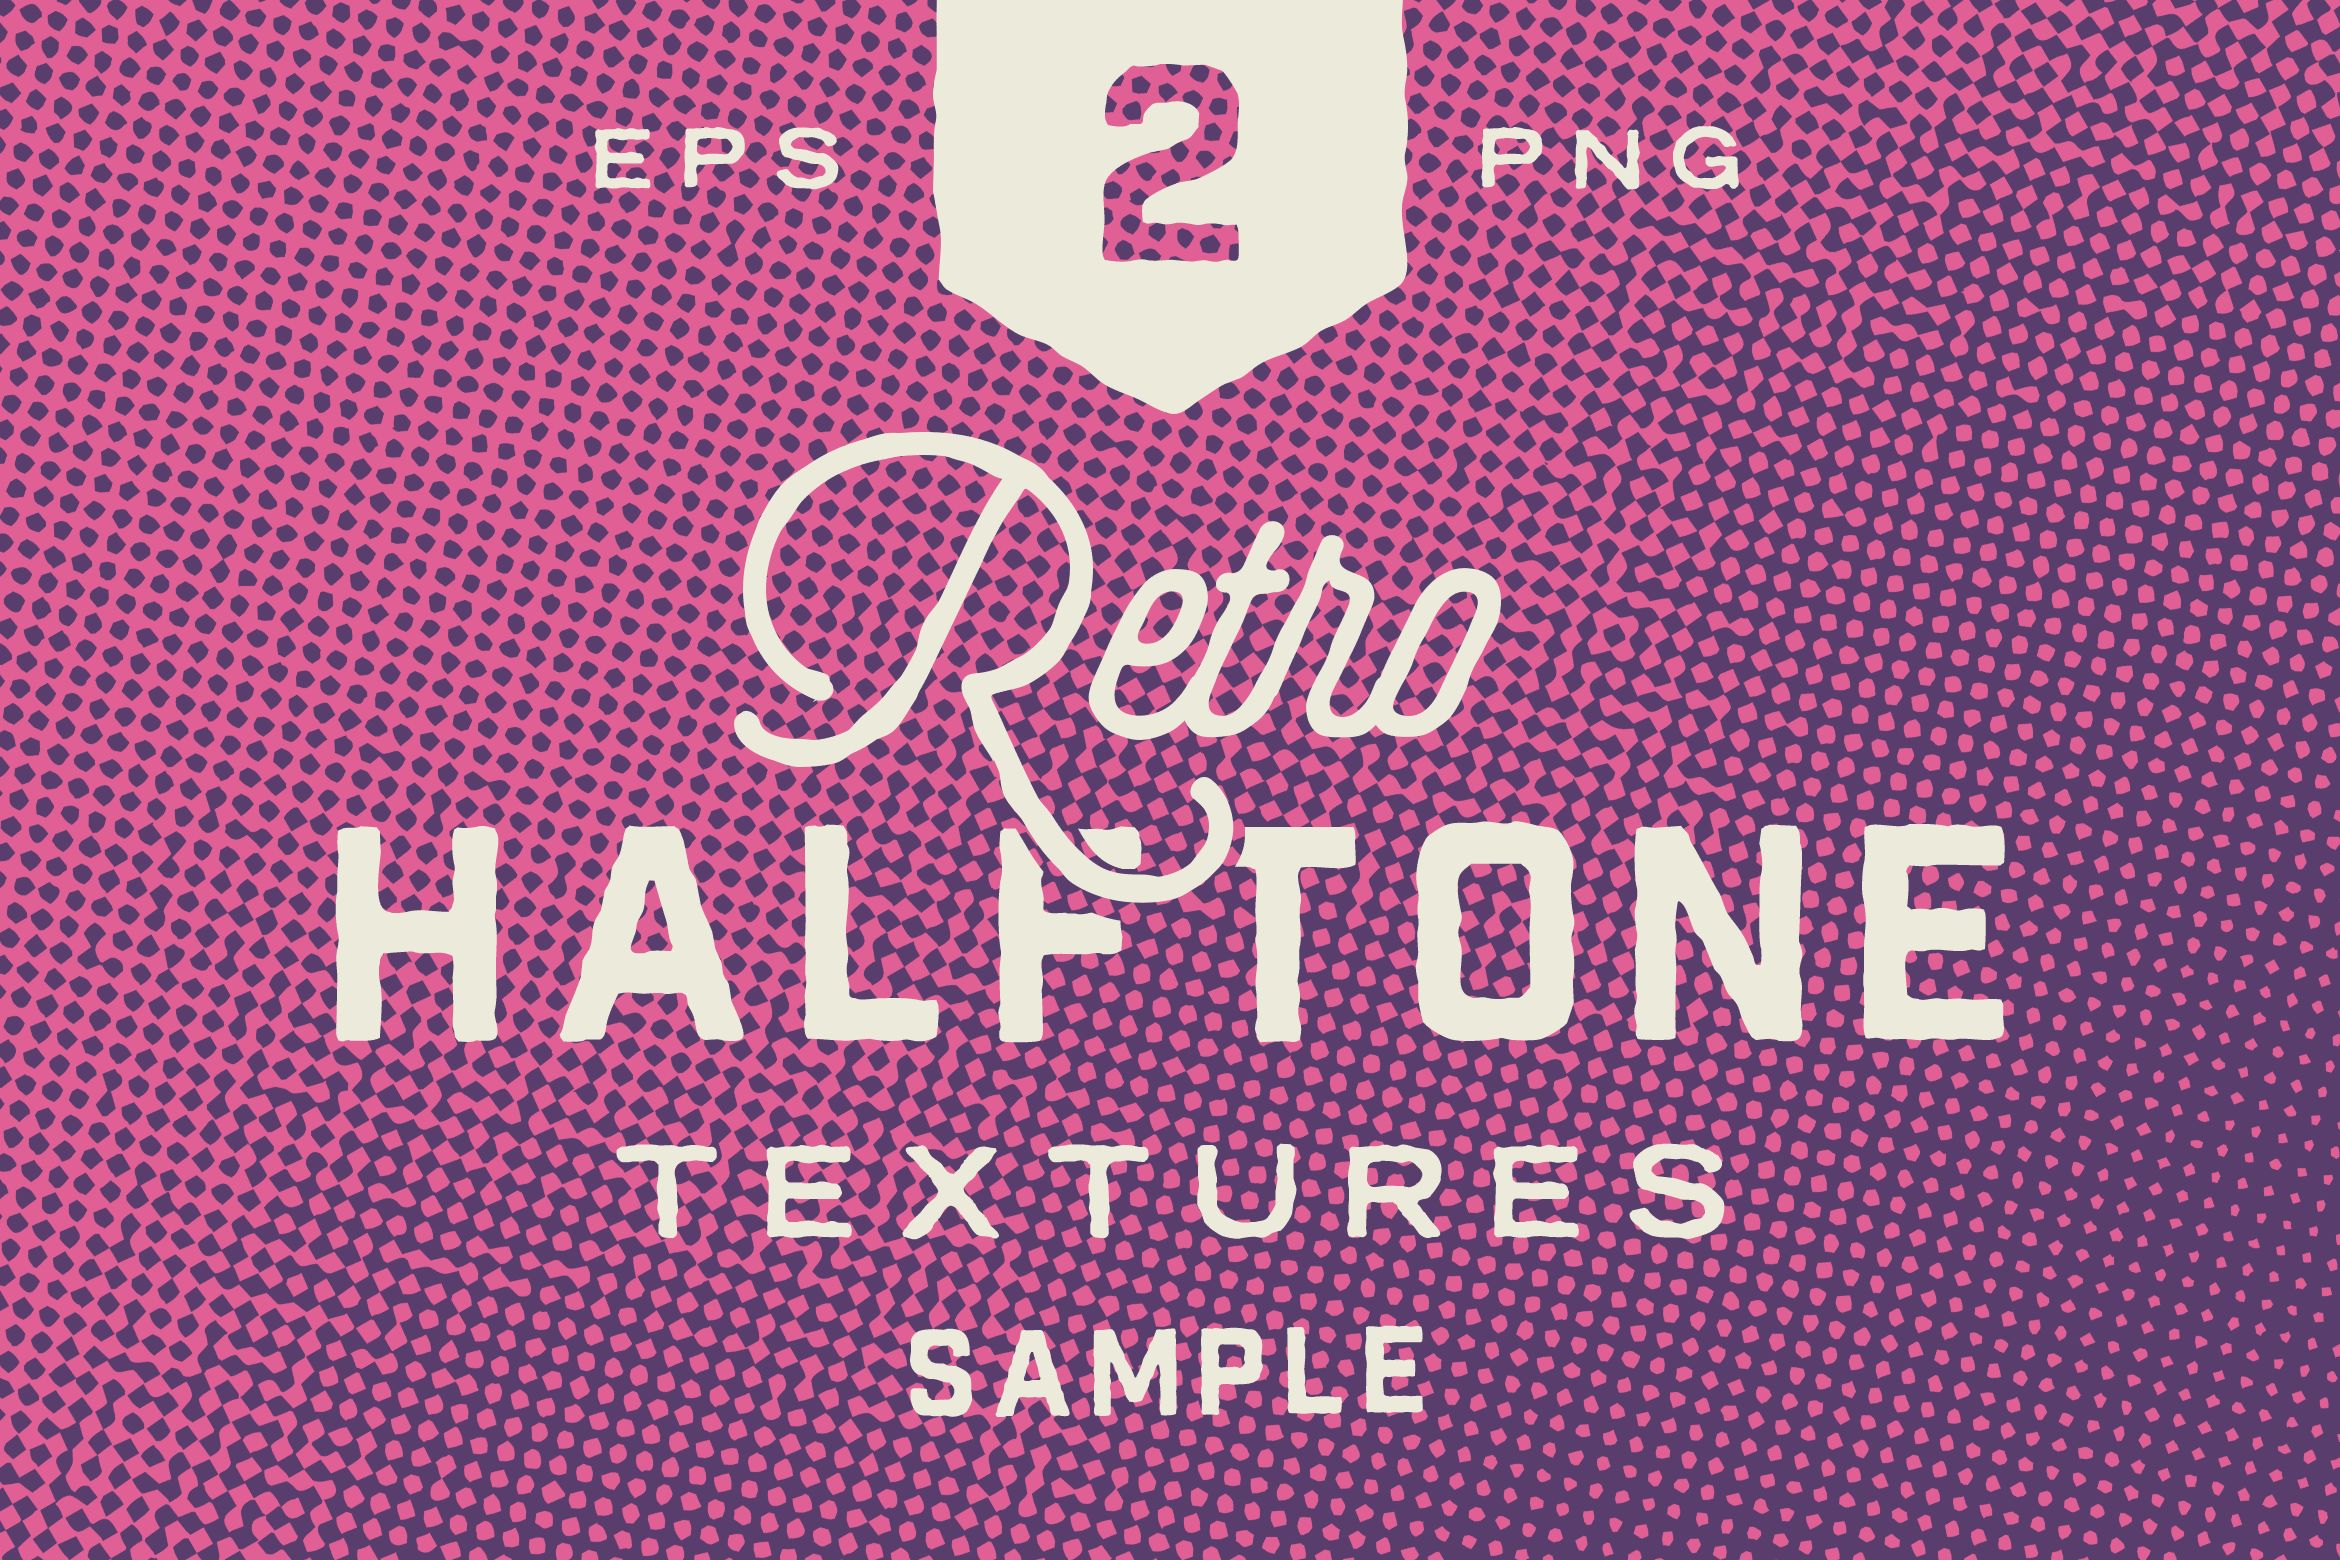 HOMwork Freebie: Retro Halftone Textures